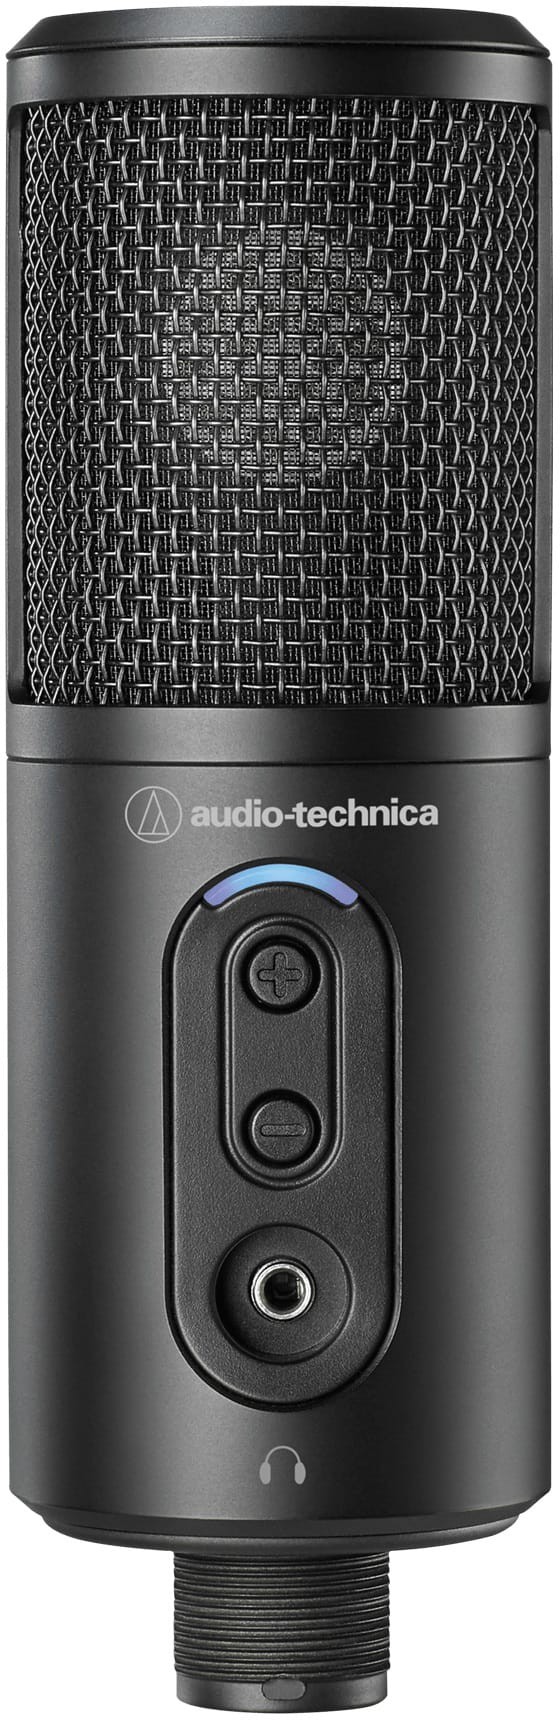 Audio Technica ATR2500X-USB